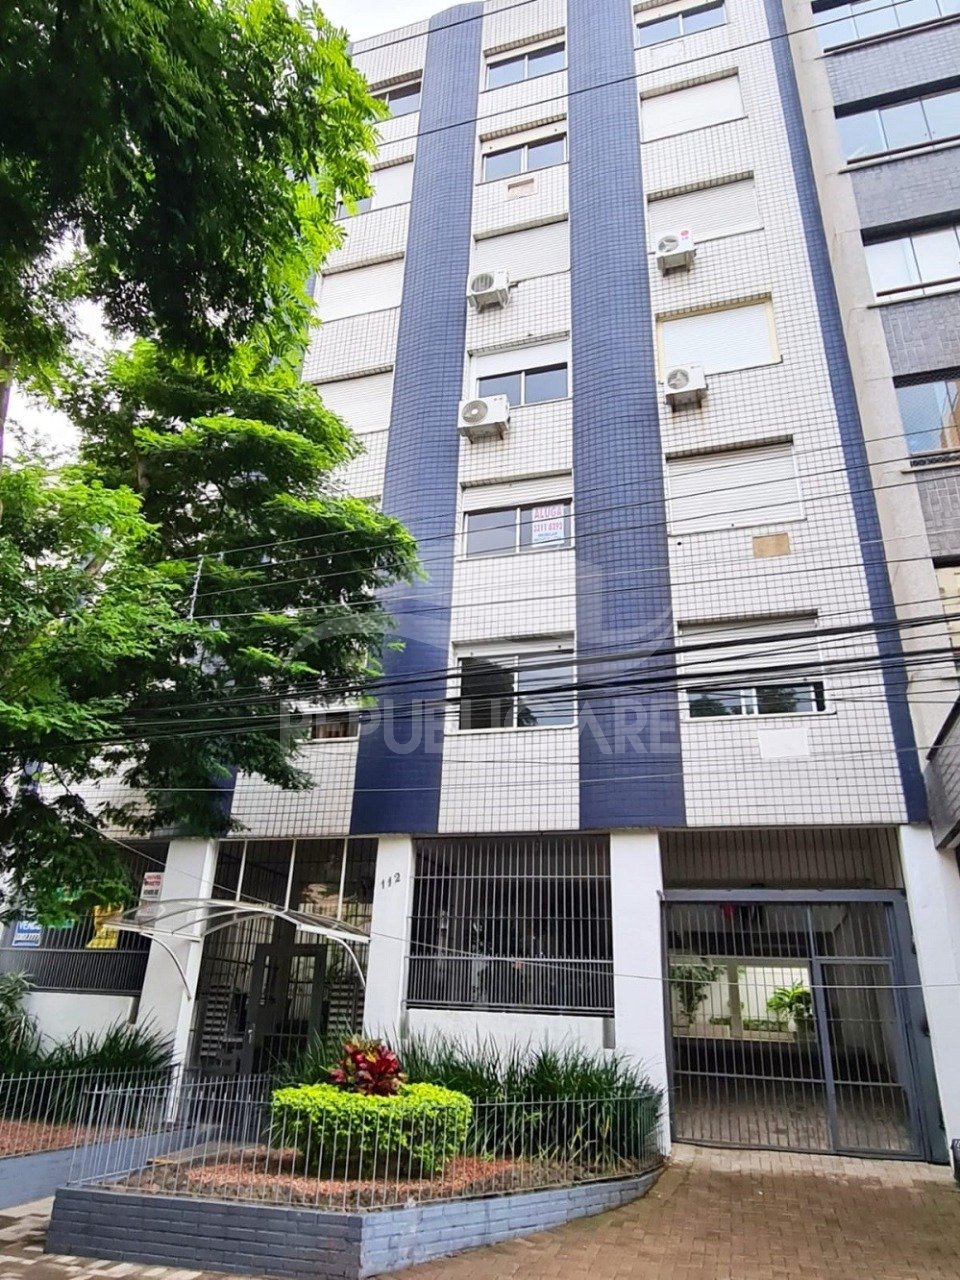 Apartamento Centro Histórico Porto Alegre